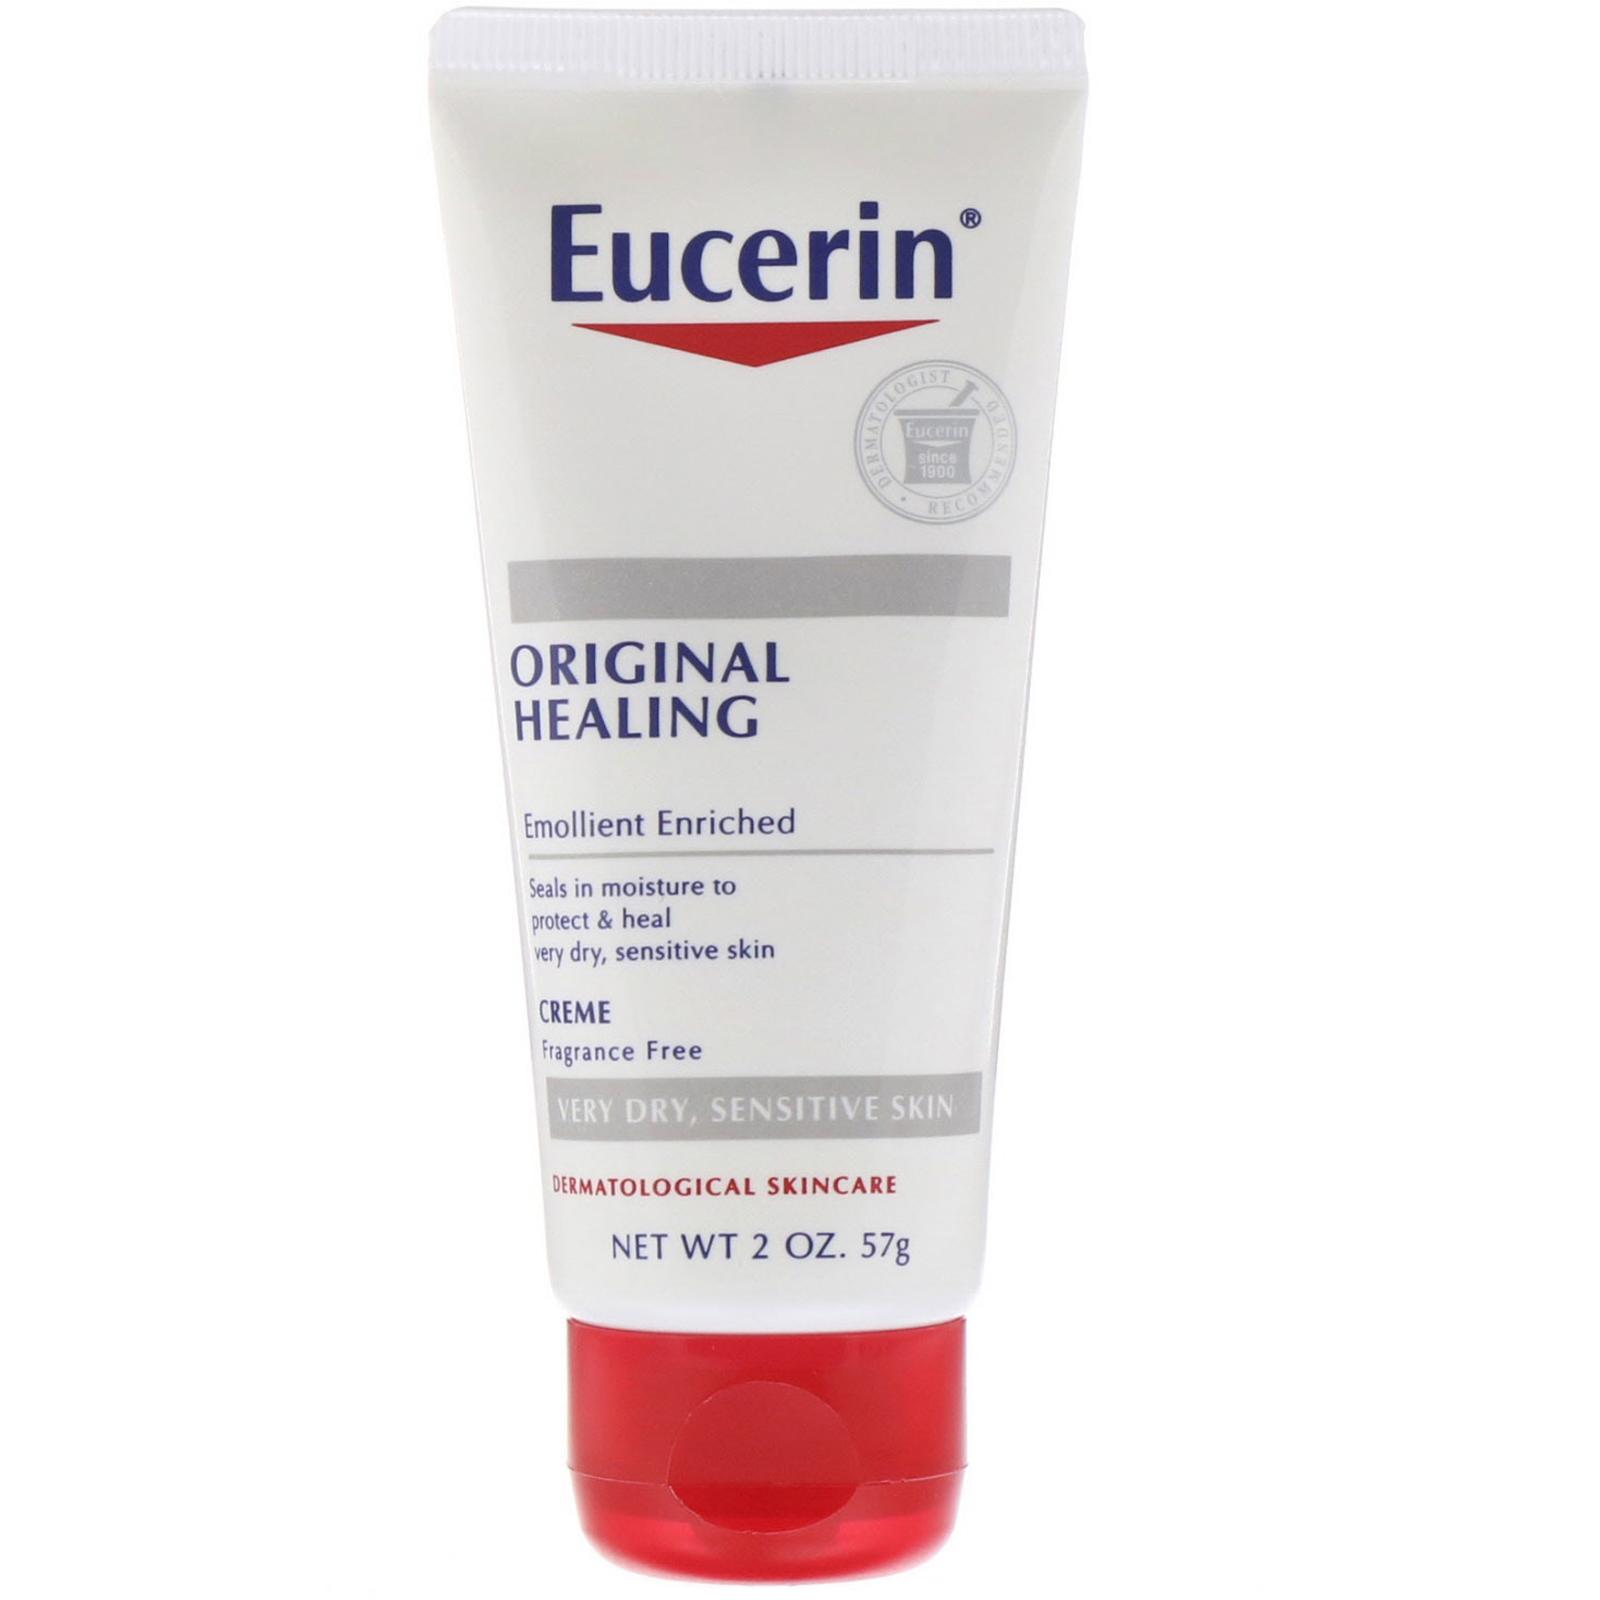 Eucerin Original Healing Cream 57g